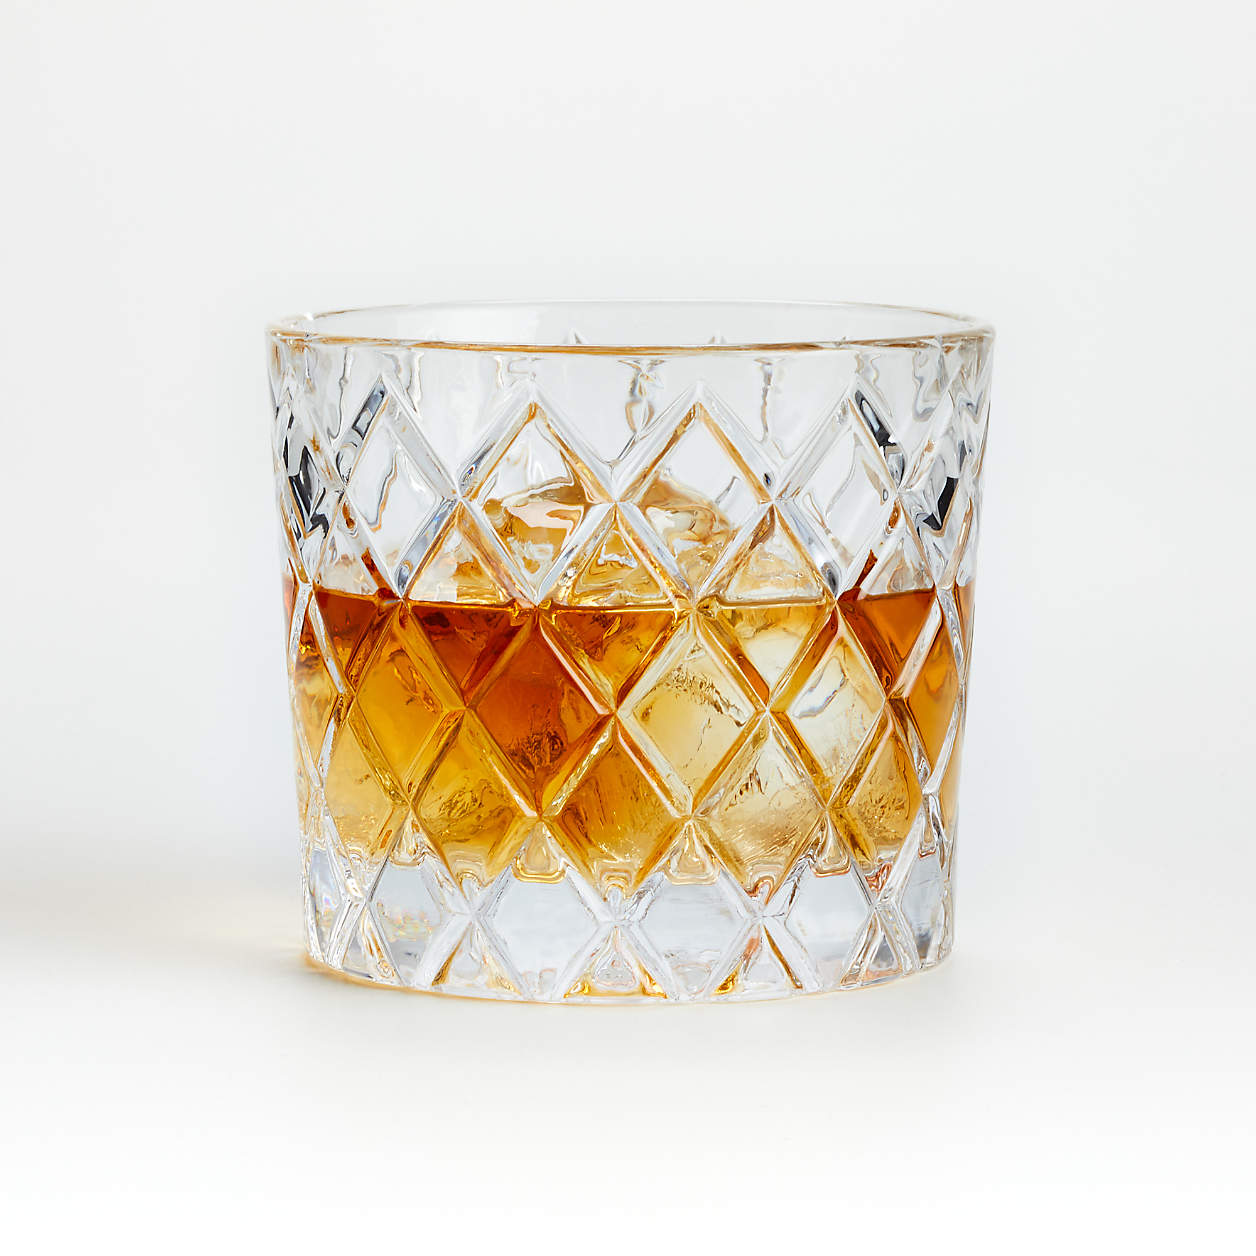 Death & Co: Modern Classic Cocktails (Hardcover), 750ml bottle of Toki Whiskey & 2 Rocks Glasses